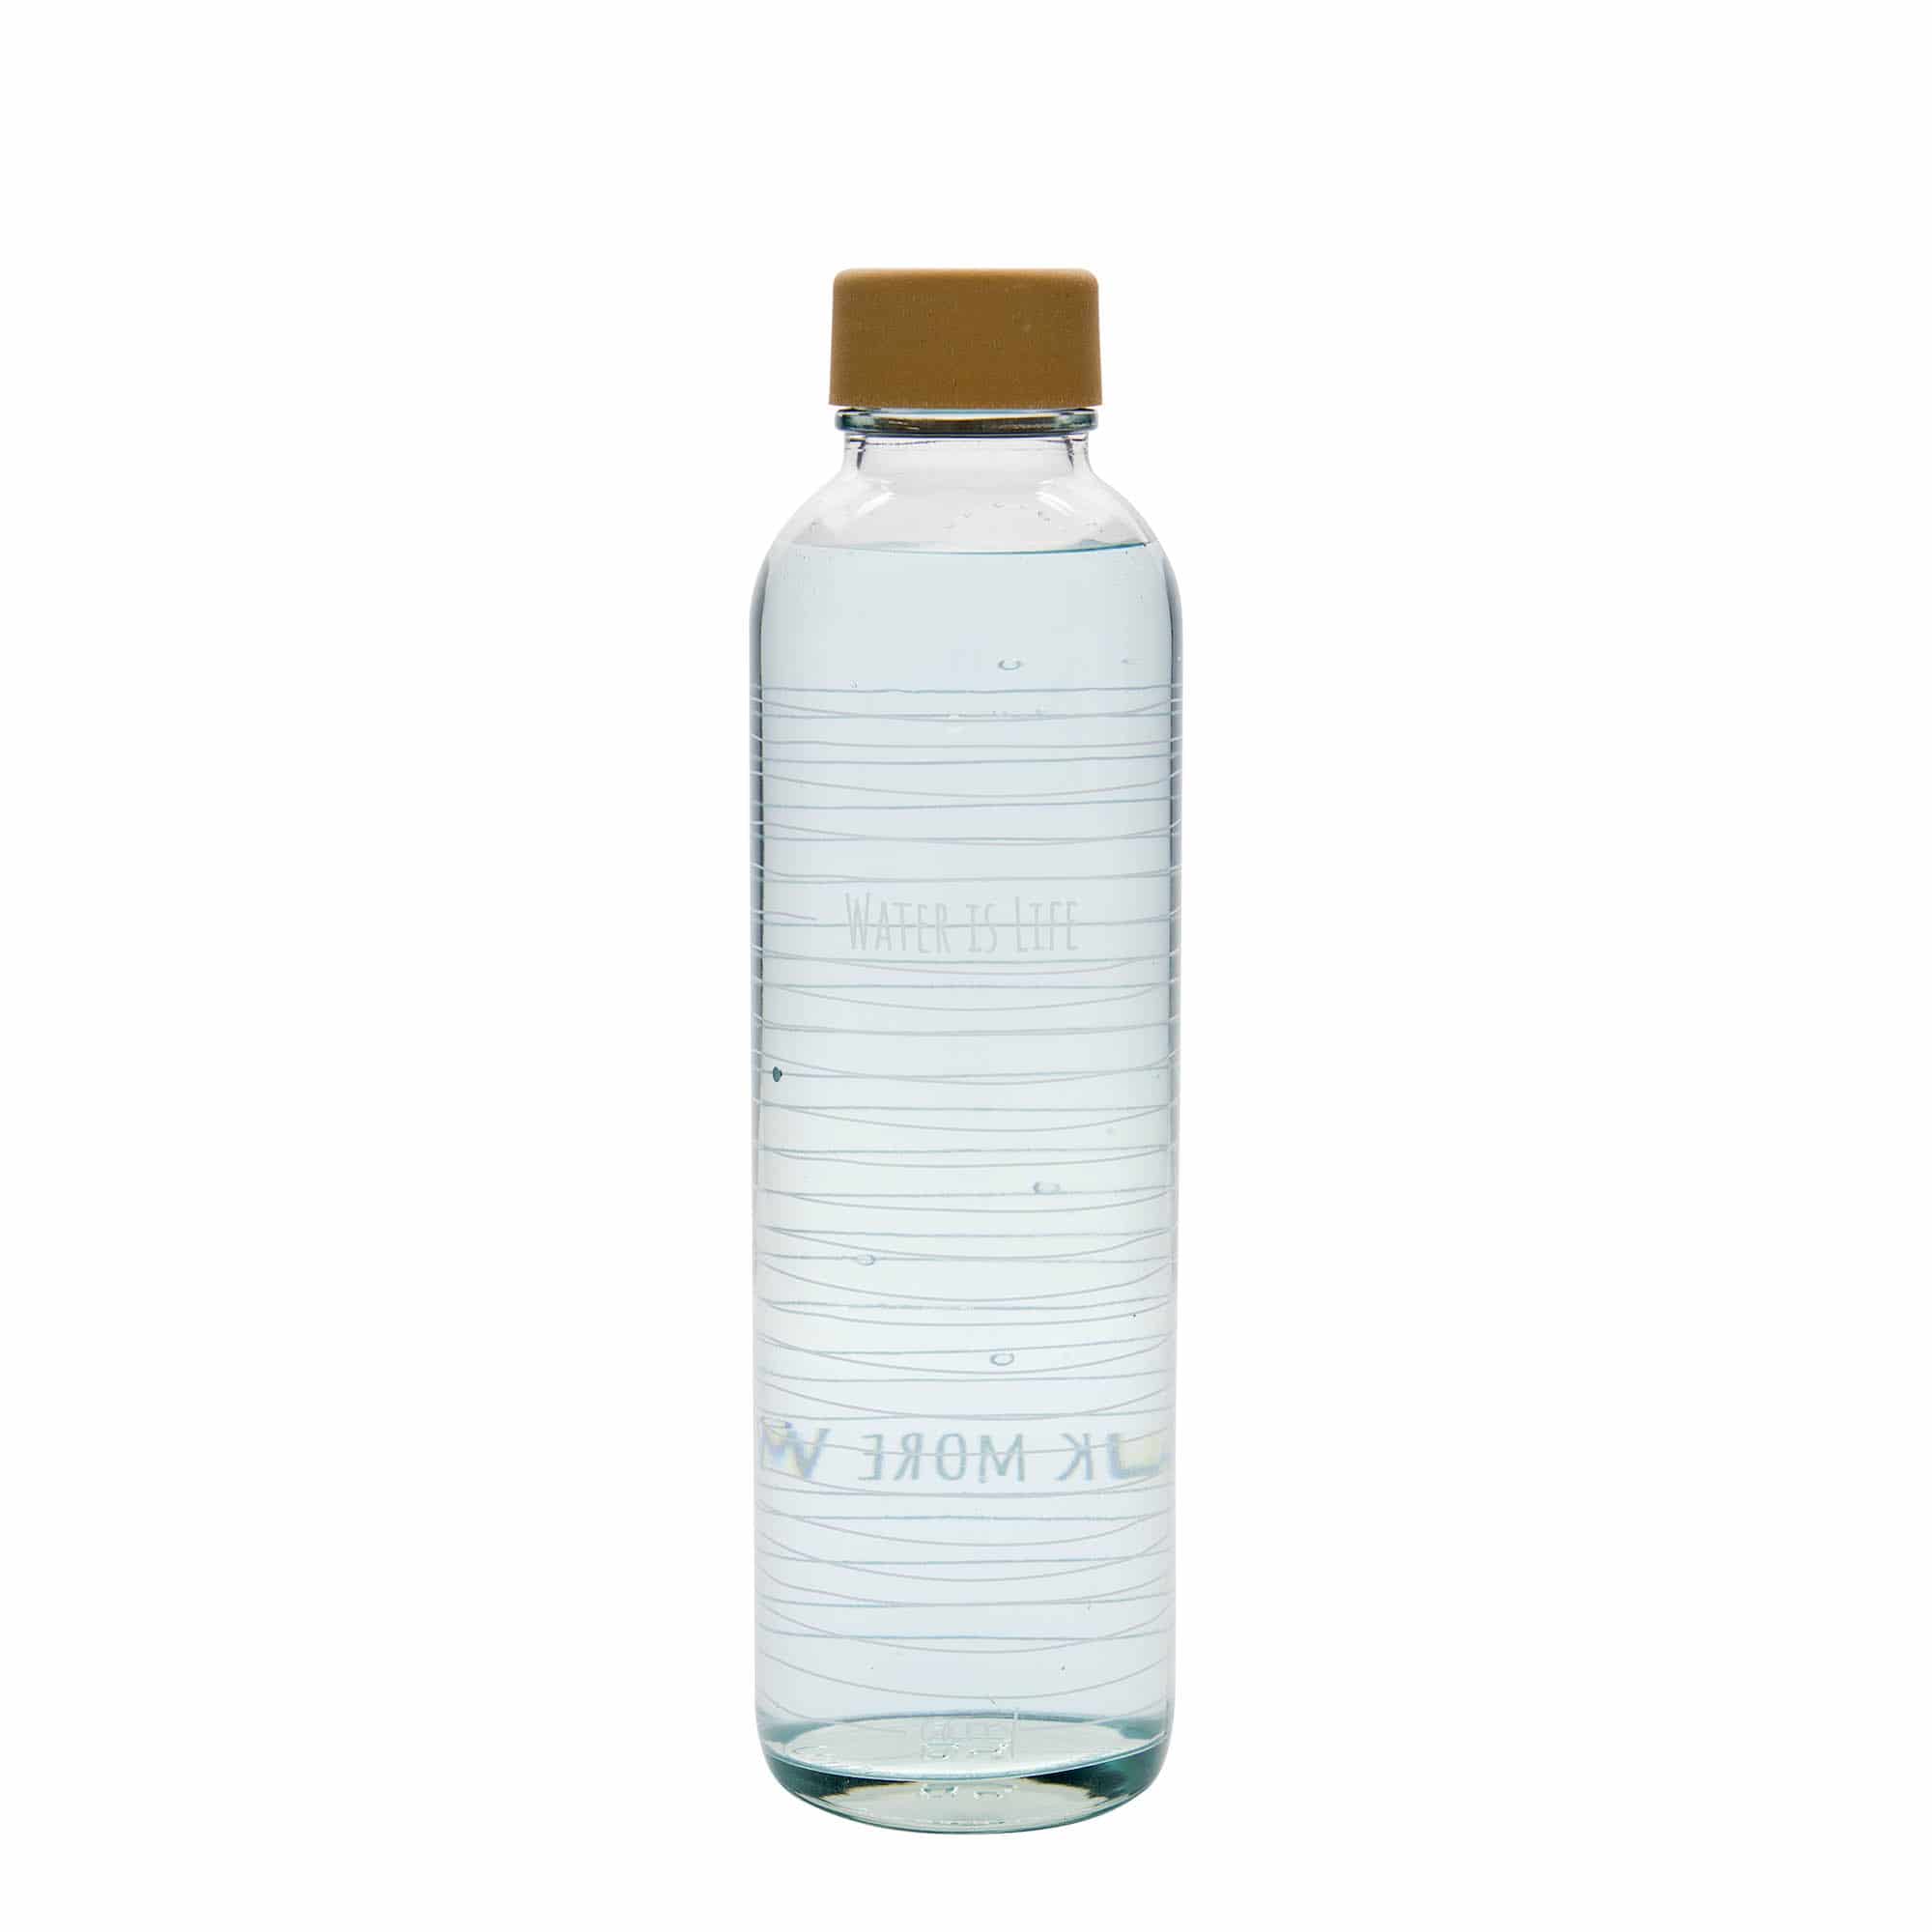 700 ml Garrafa de água CARRY Bottle, Motivo: Water is Life, boca: Tampa de rosca